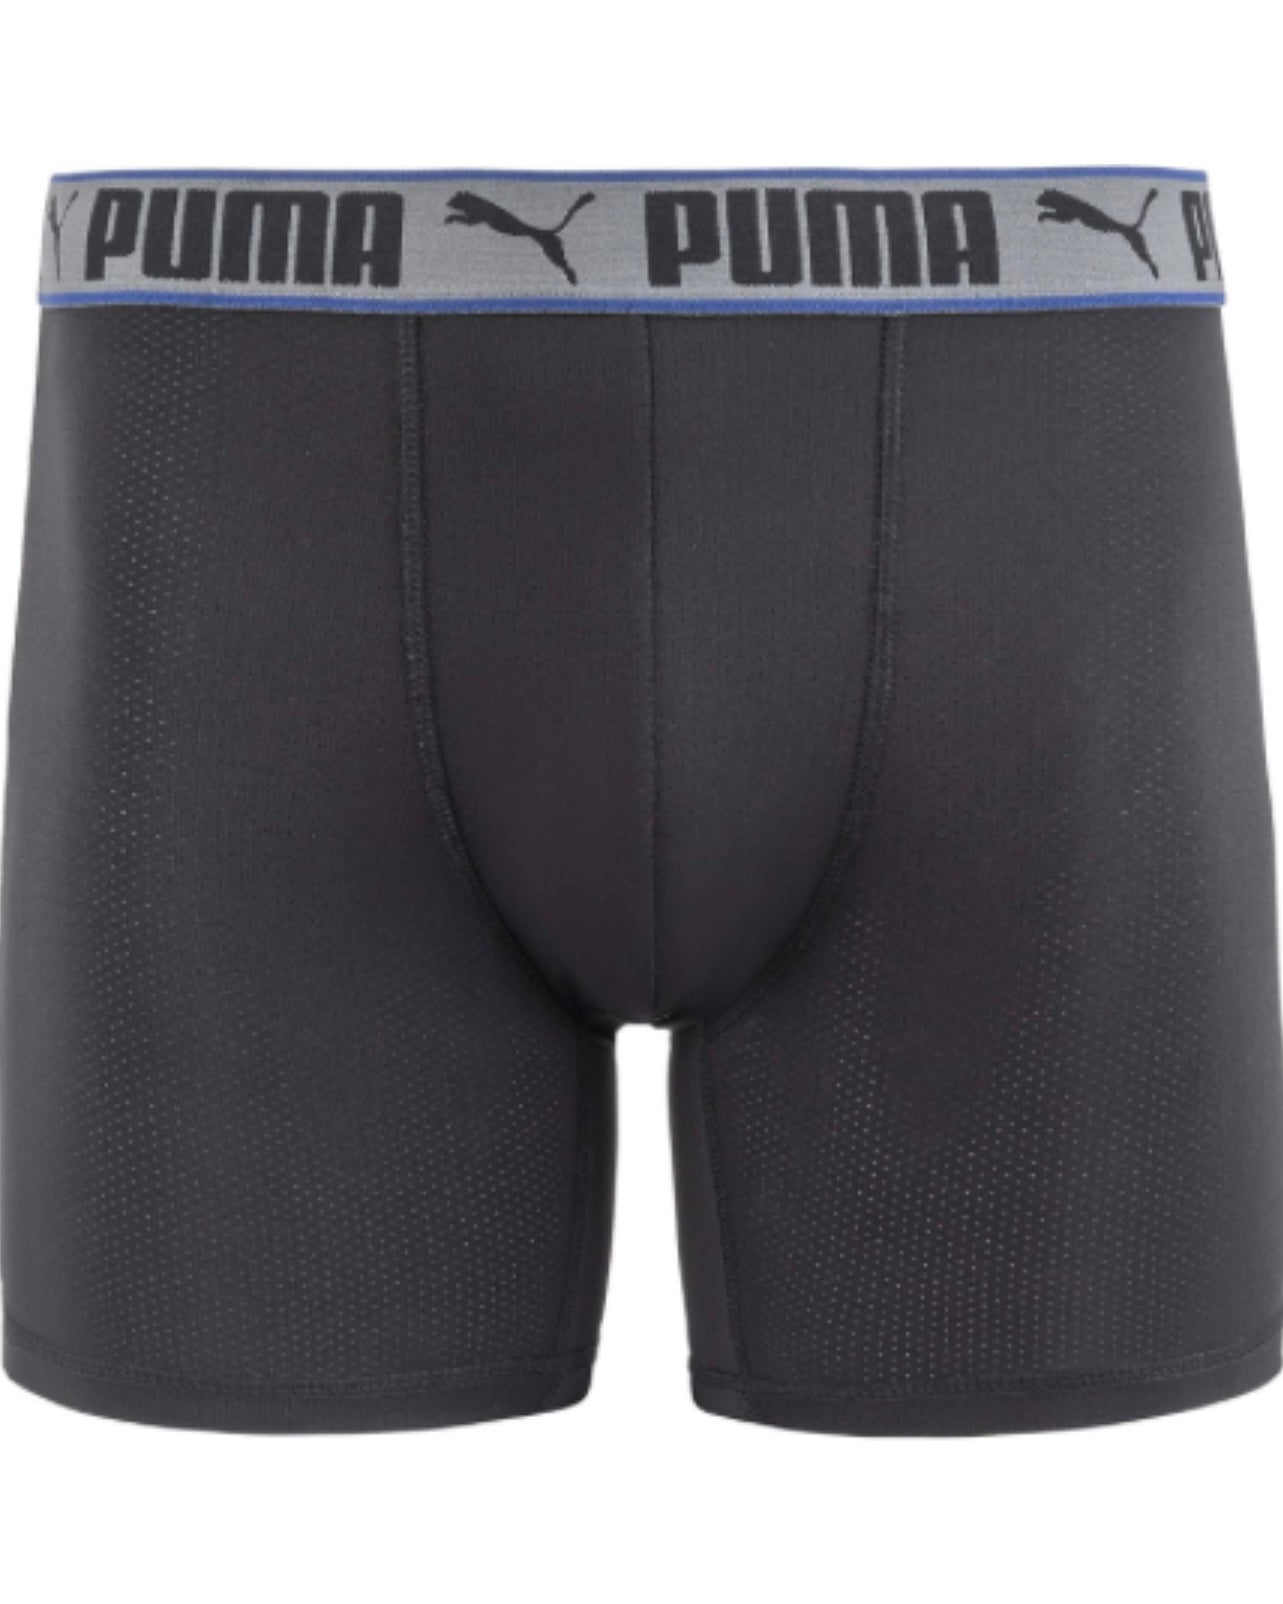 Combo de 3 Boxers Briefs Puma 🐆 Tela Performance color Negro, azul y gris Talla M